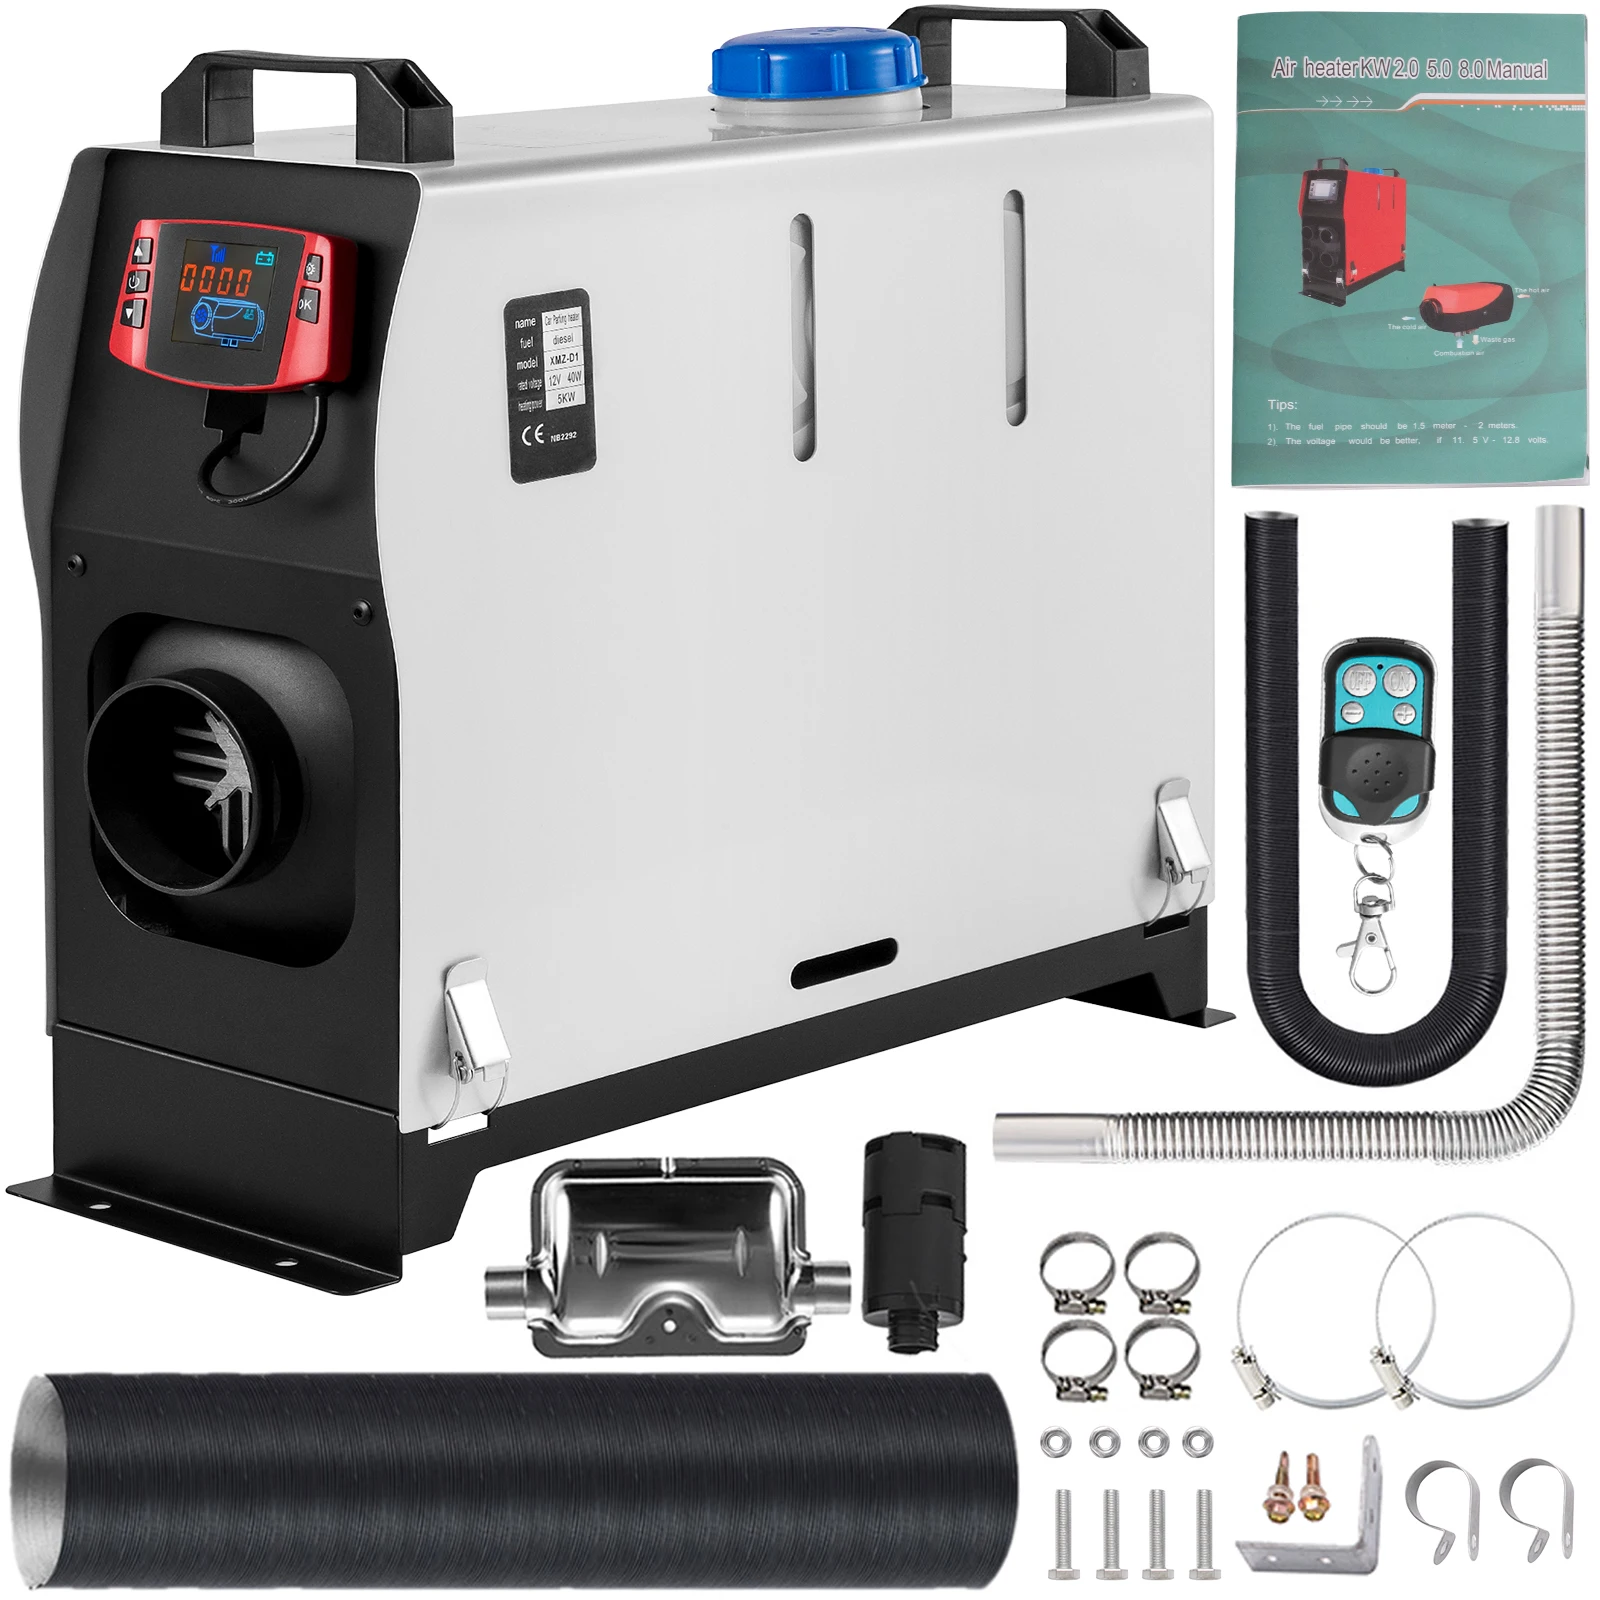 5KW 12V Diesel Air Heater Parking Heater w/ LCD Switch For Truck Car Trailer RV